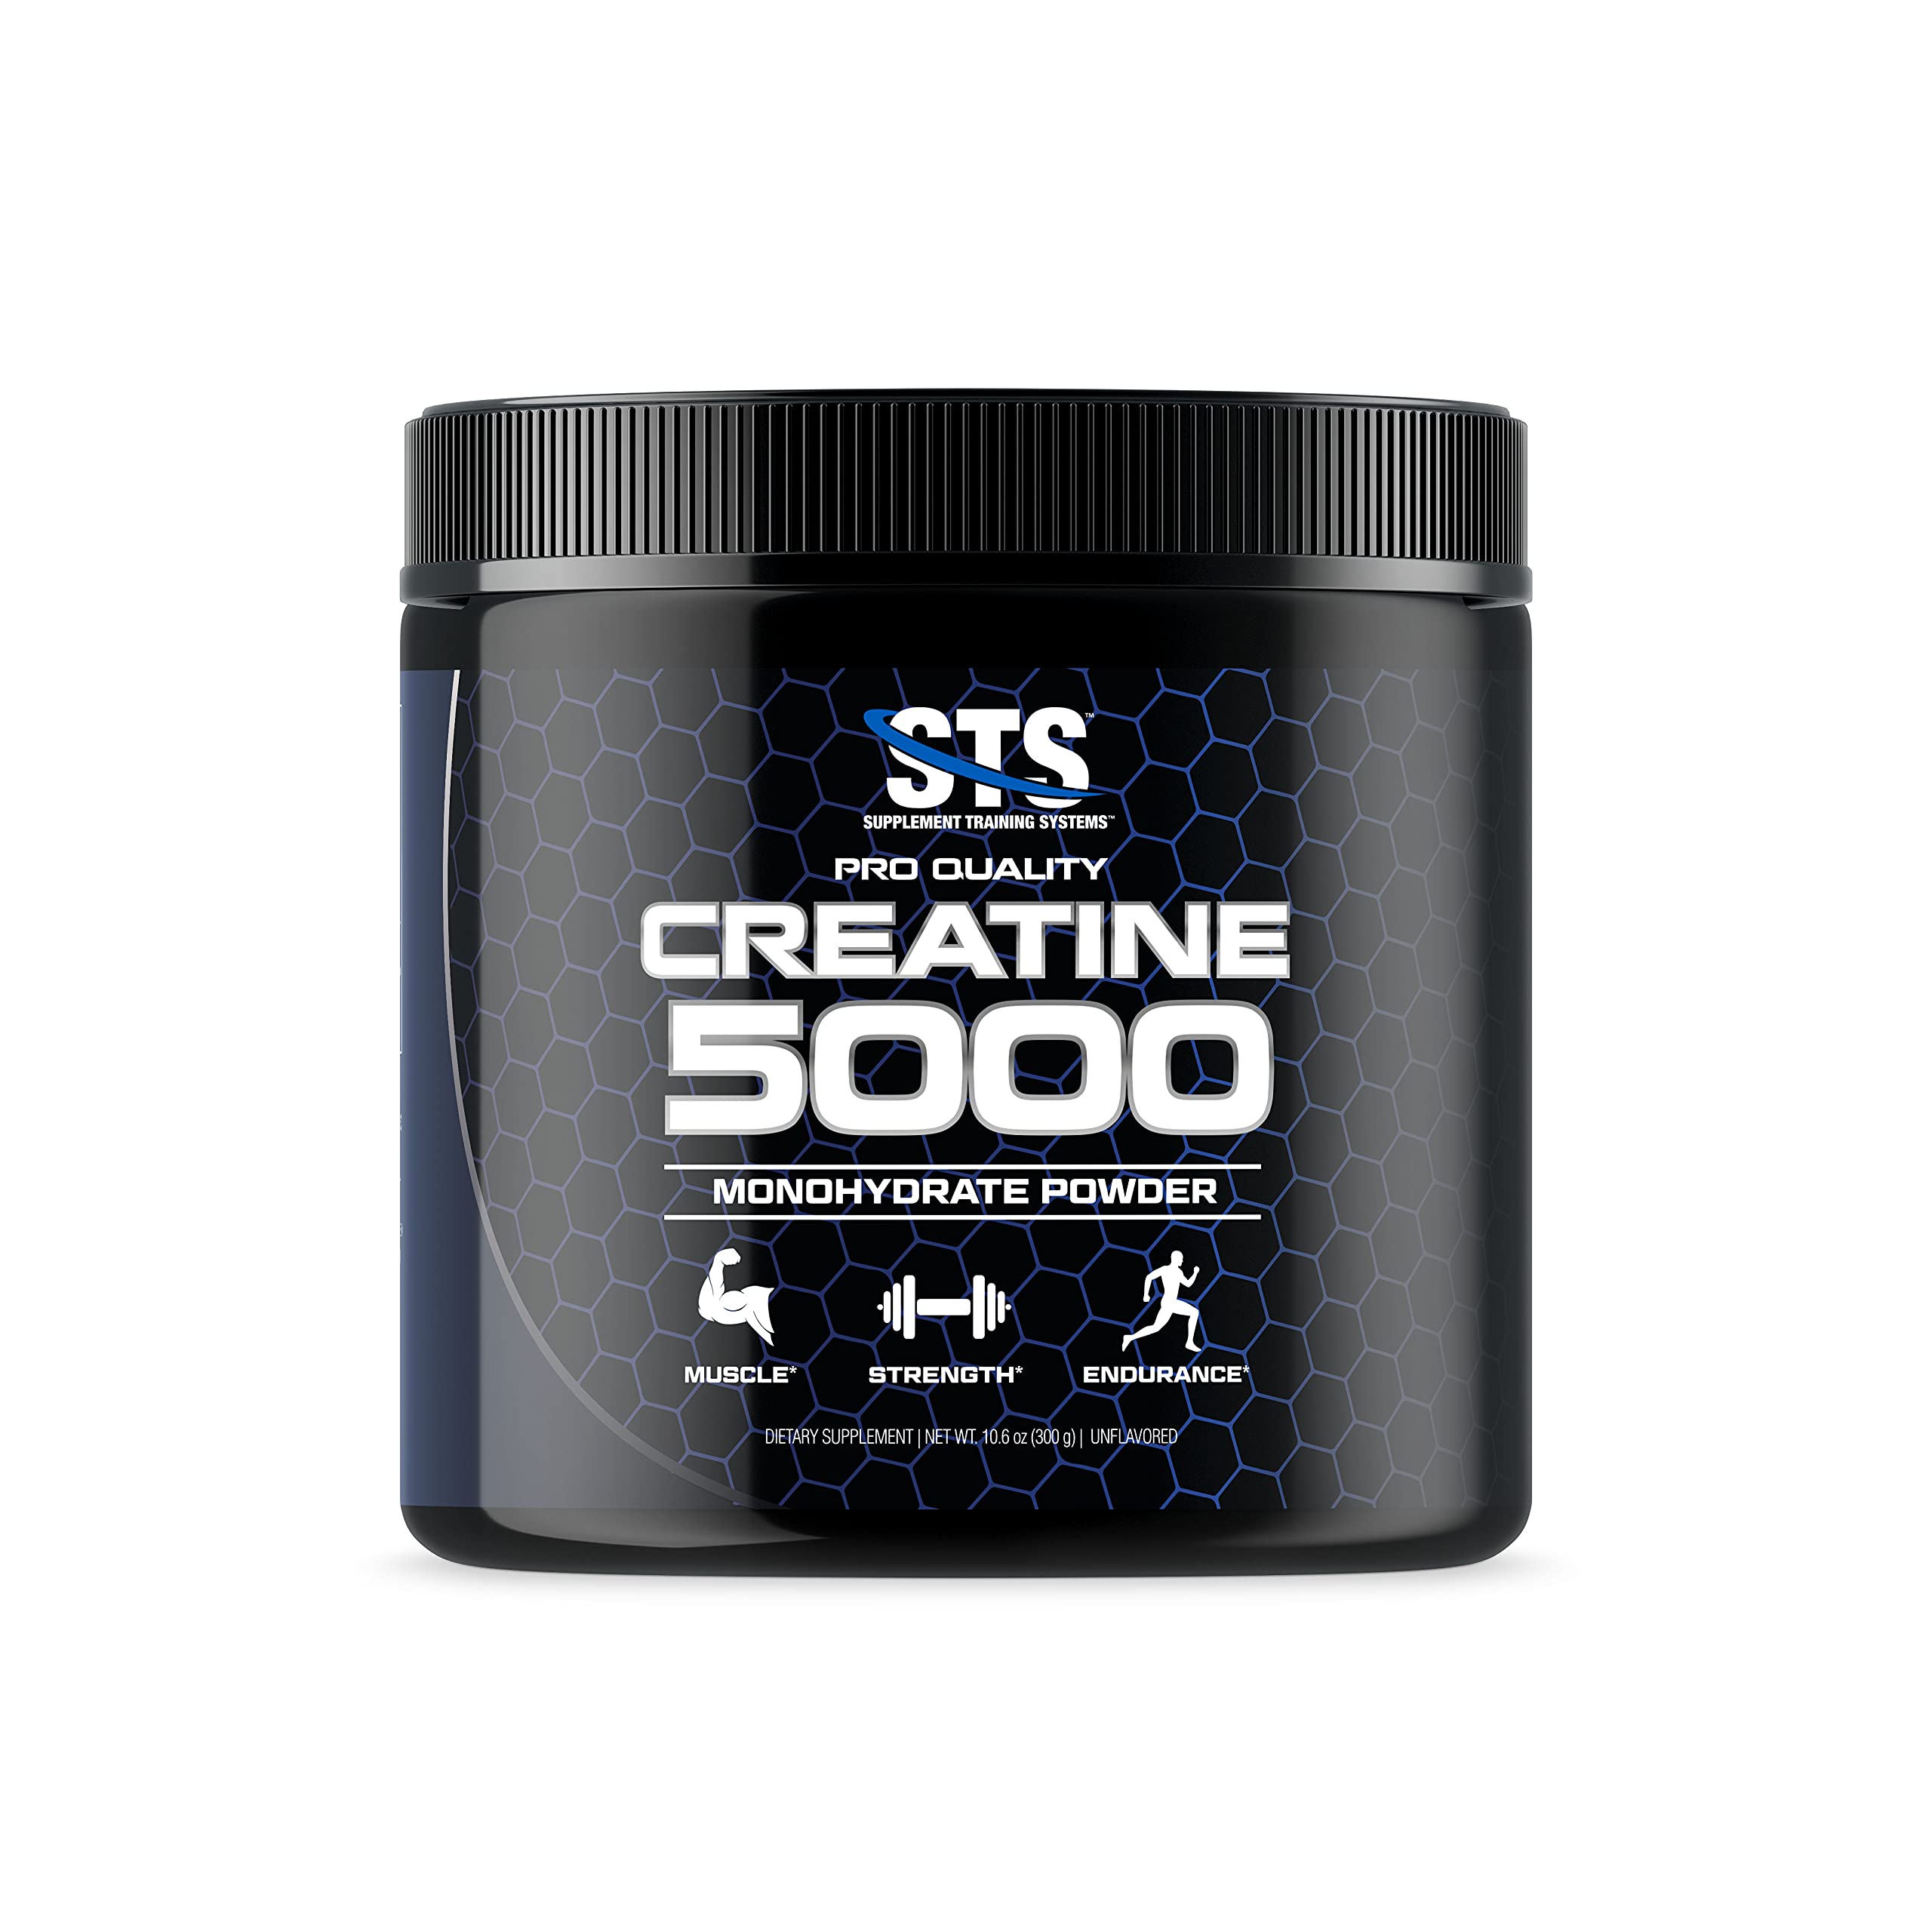 STS Creatine 300 Grams - 100% Pure Raw Creatine Monohydrate Powder, Keto Friendly - 60 Servings